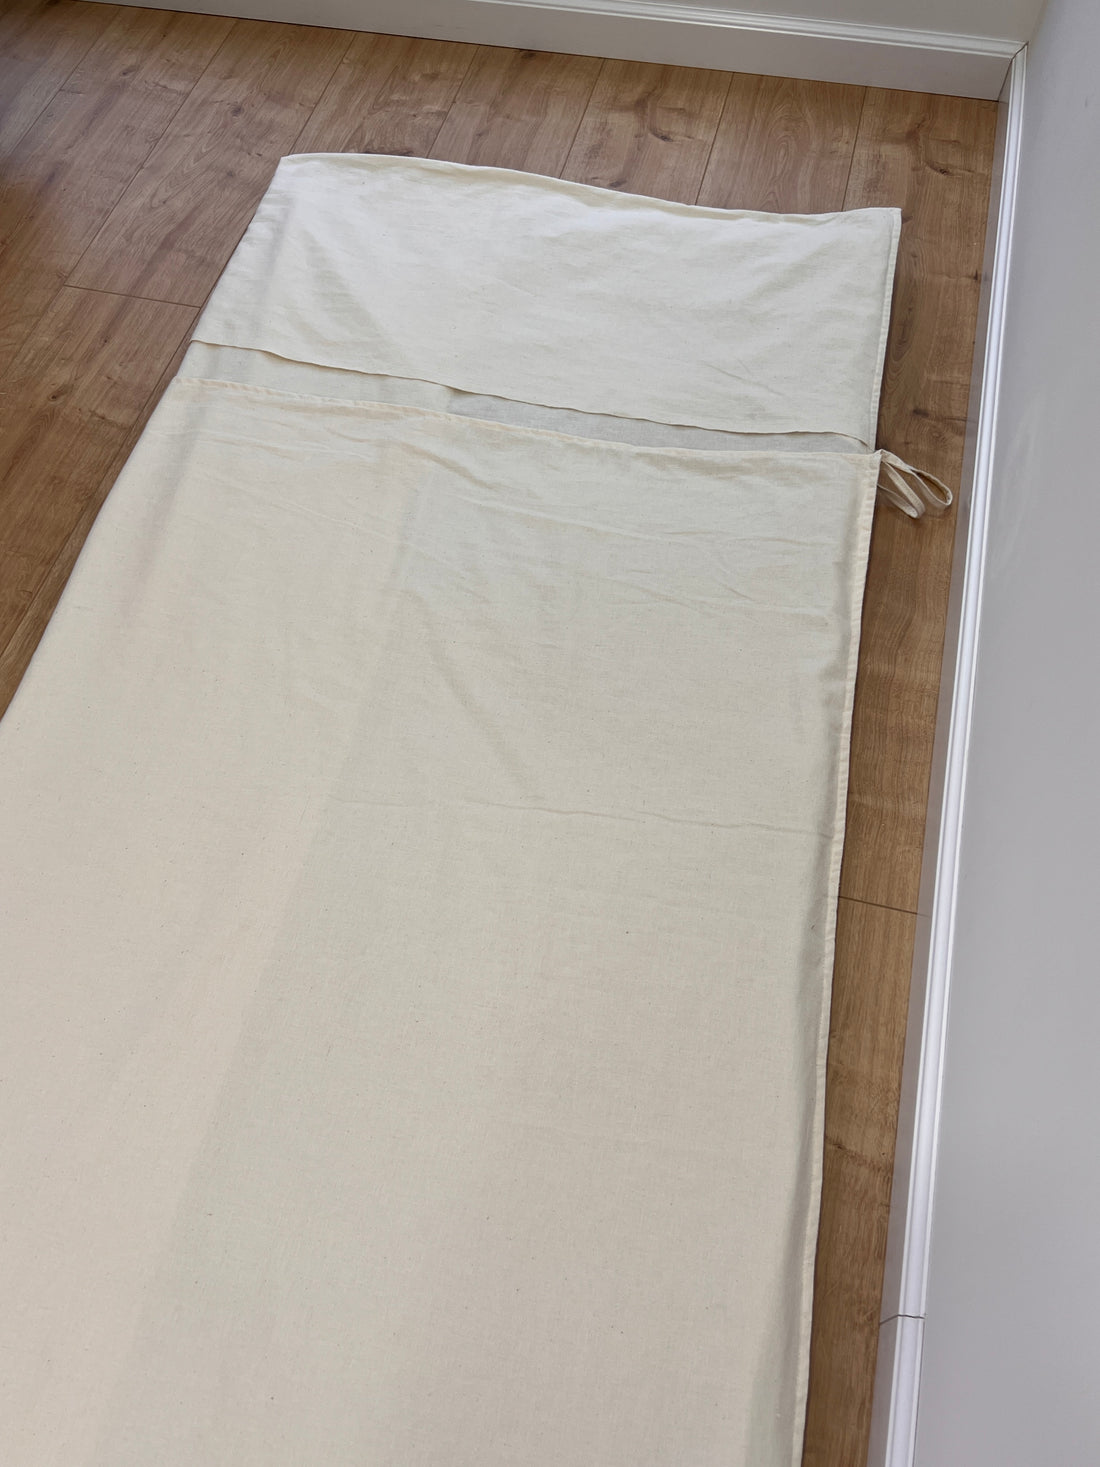 HEMP Single Sleeping Bag Liner for Camping Hiking Hostel Travel organic non-dyed hemp fabric custom made